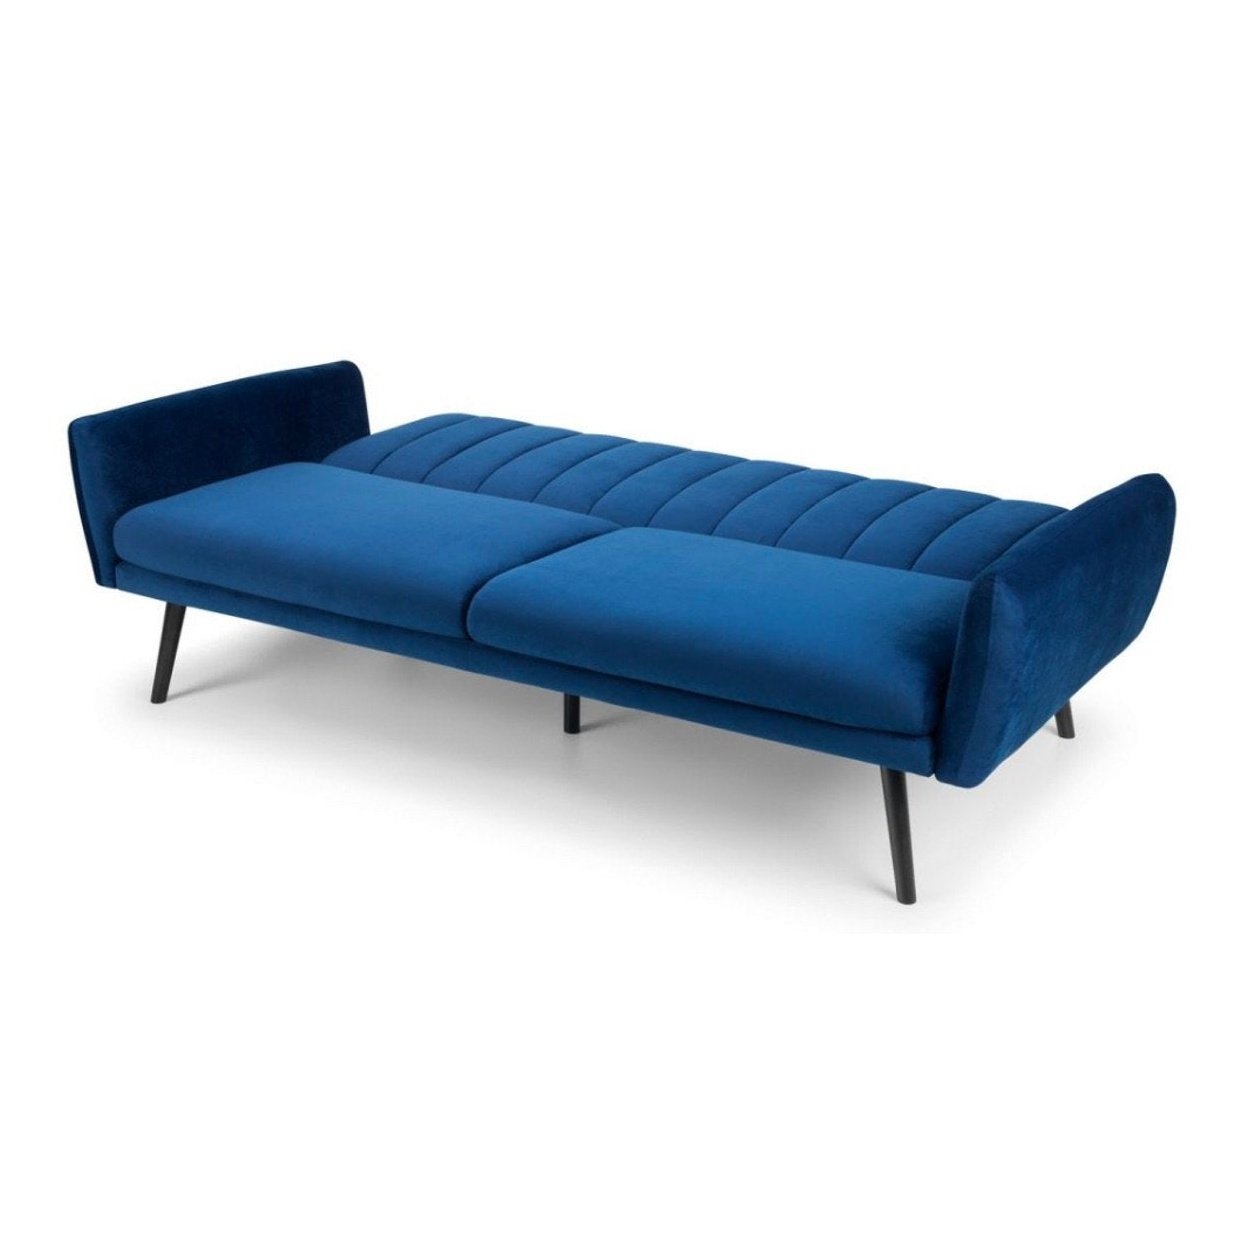 Bella Sofa bed folded out - blue velvet | Manor Interiors